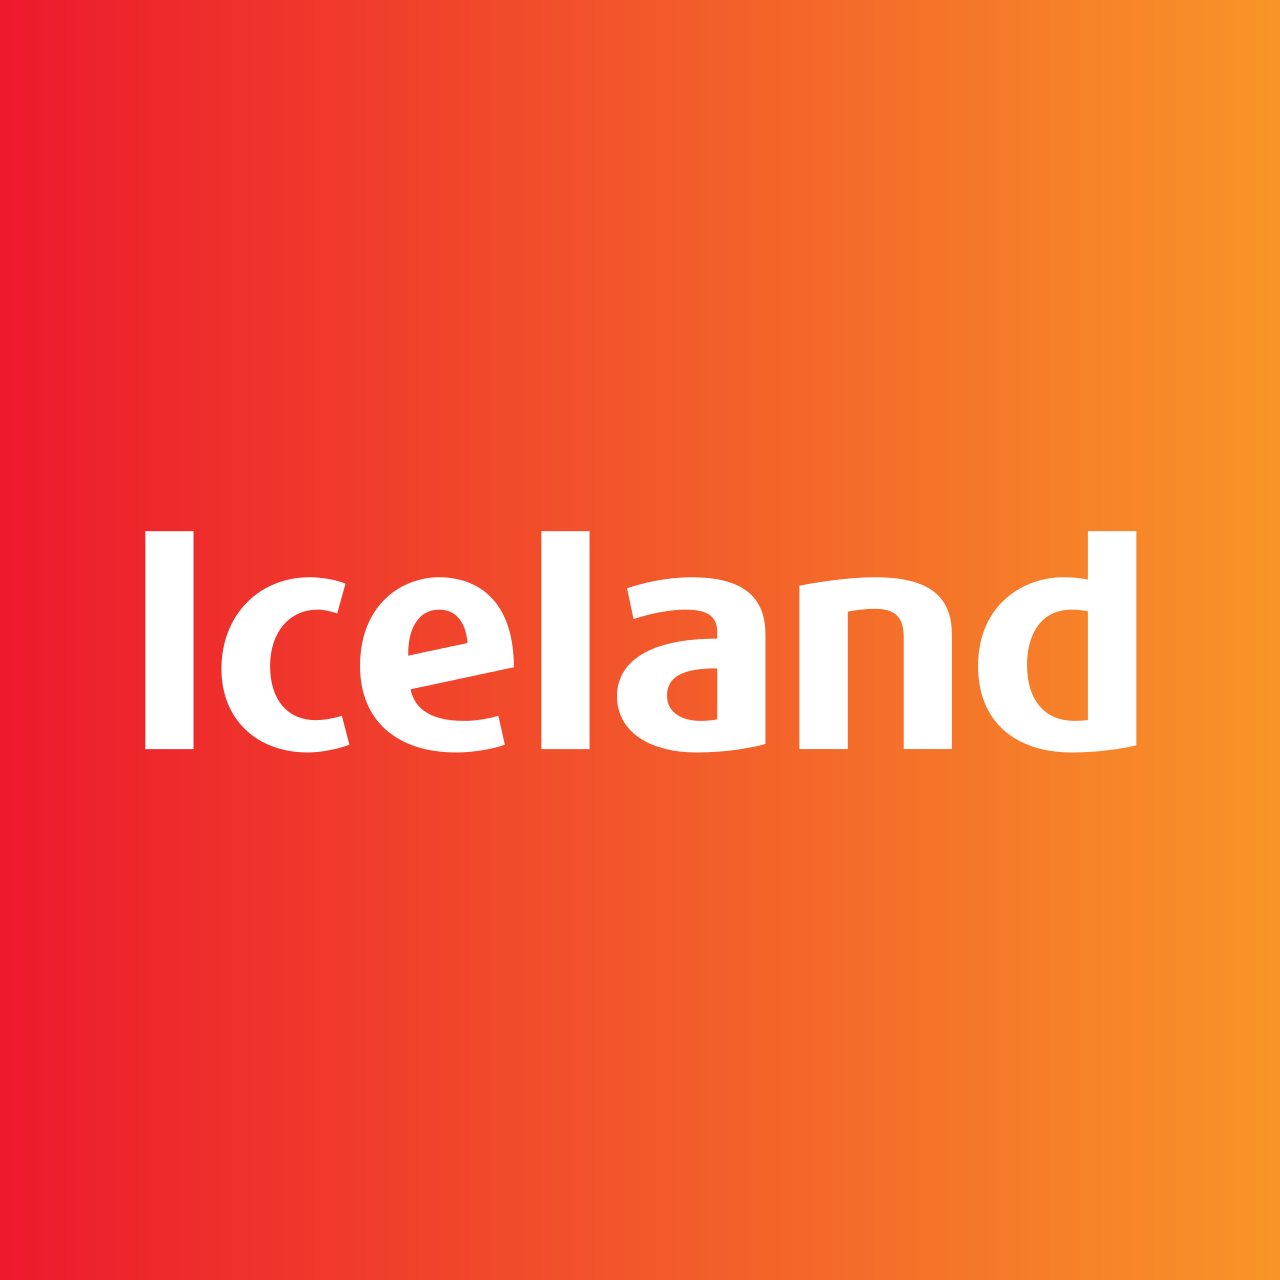 Iceland_logo.png